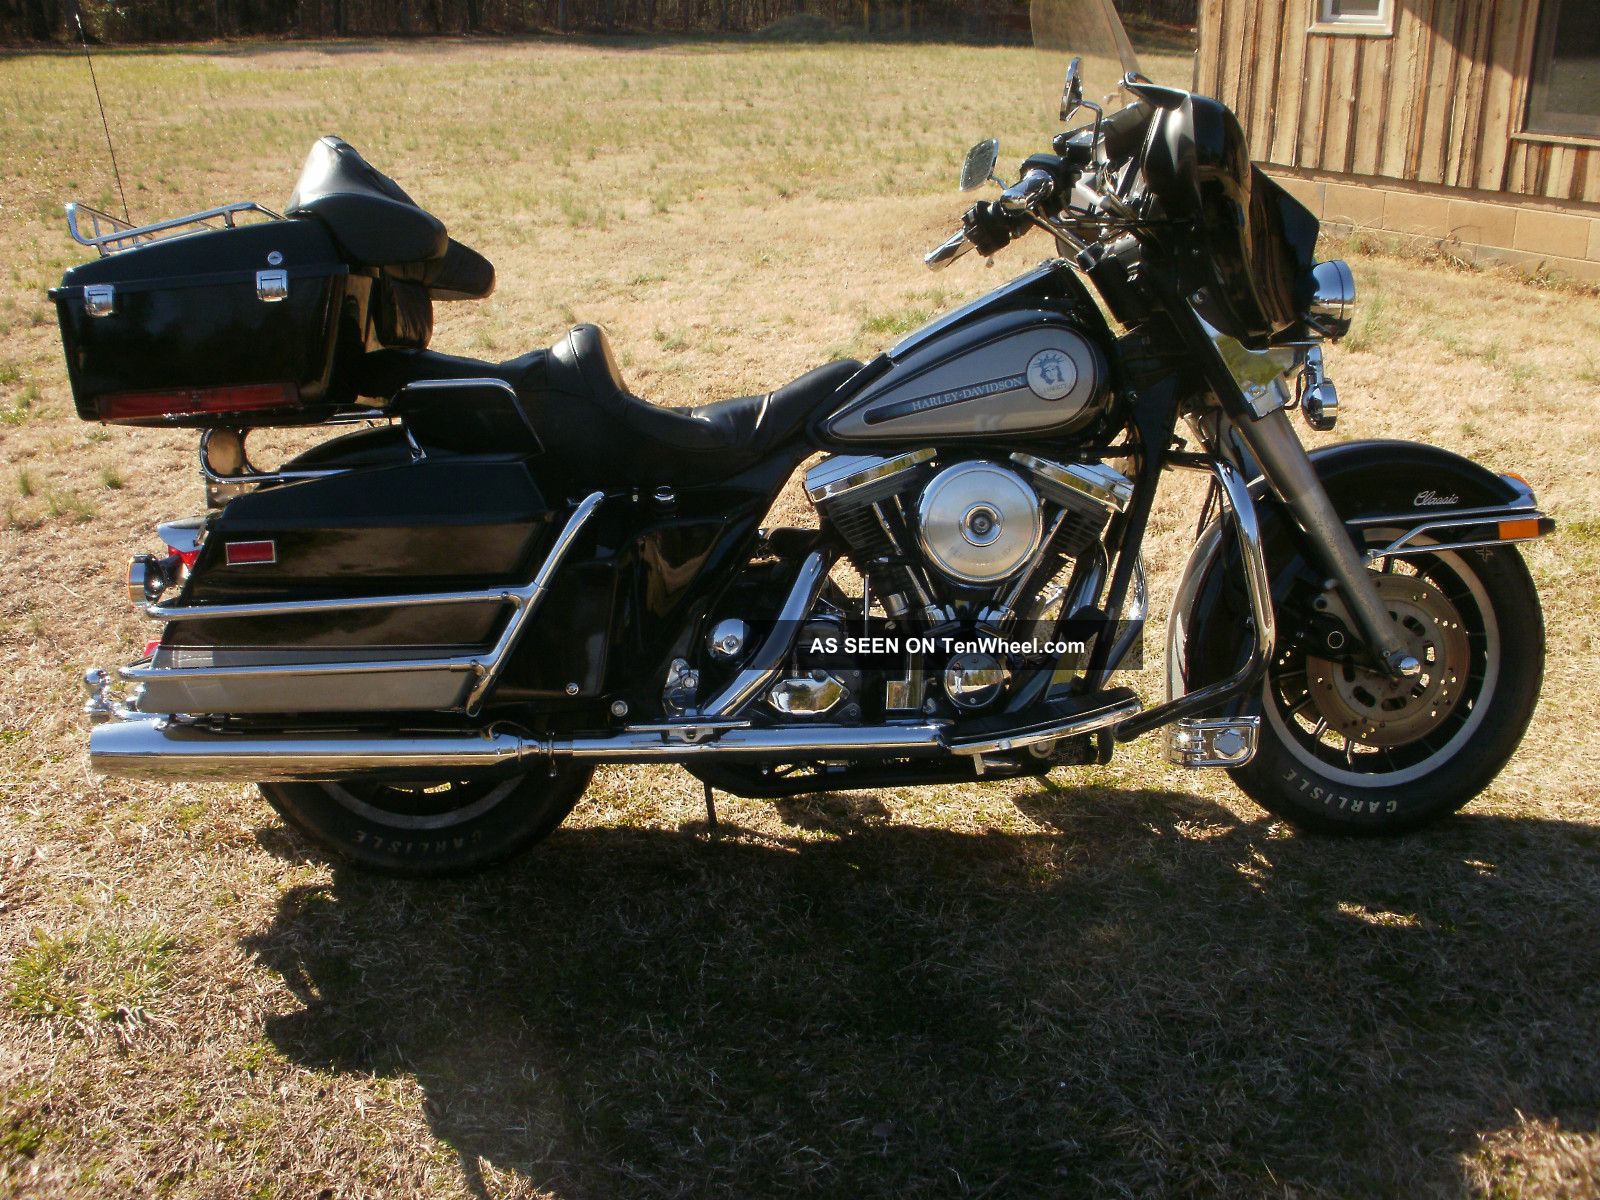 1986 Harley Davidson Flhtc Electra Glide Classic Liberty Edition Black Westlake Village California 83467 Chopperexchange